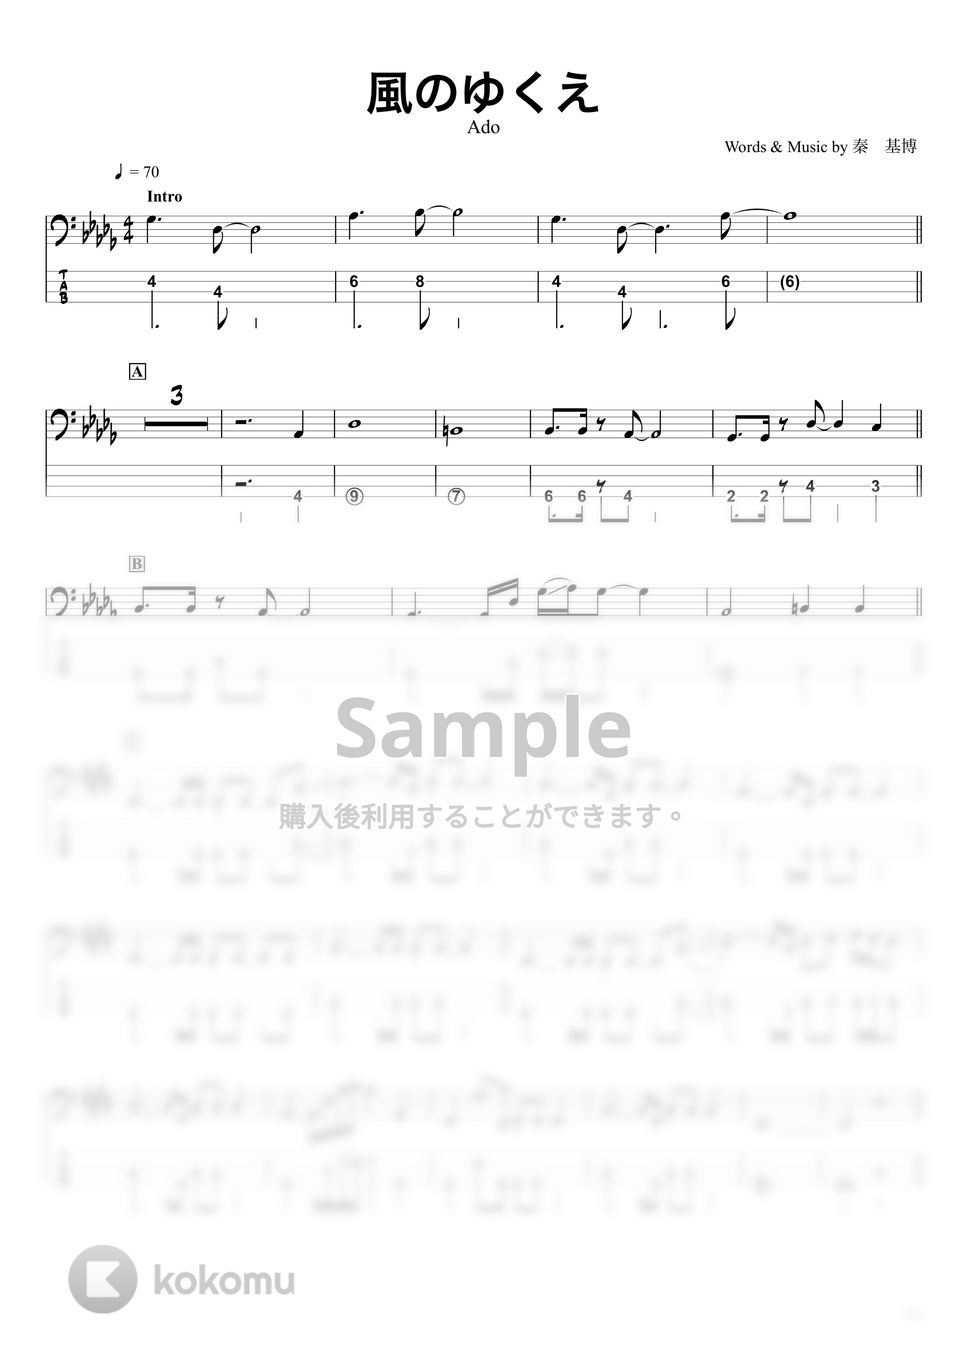 Ado - 風のゆくえ (ベースTAB譜☆4弦ベース対応) by swbass